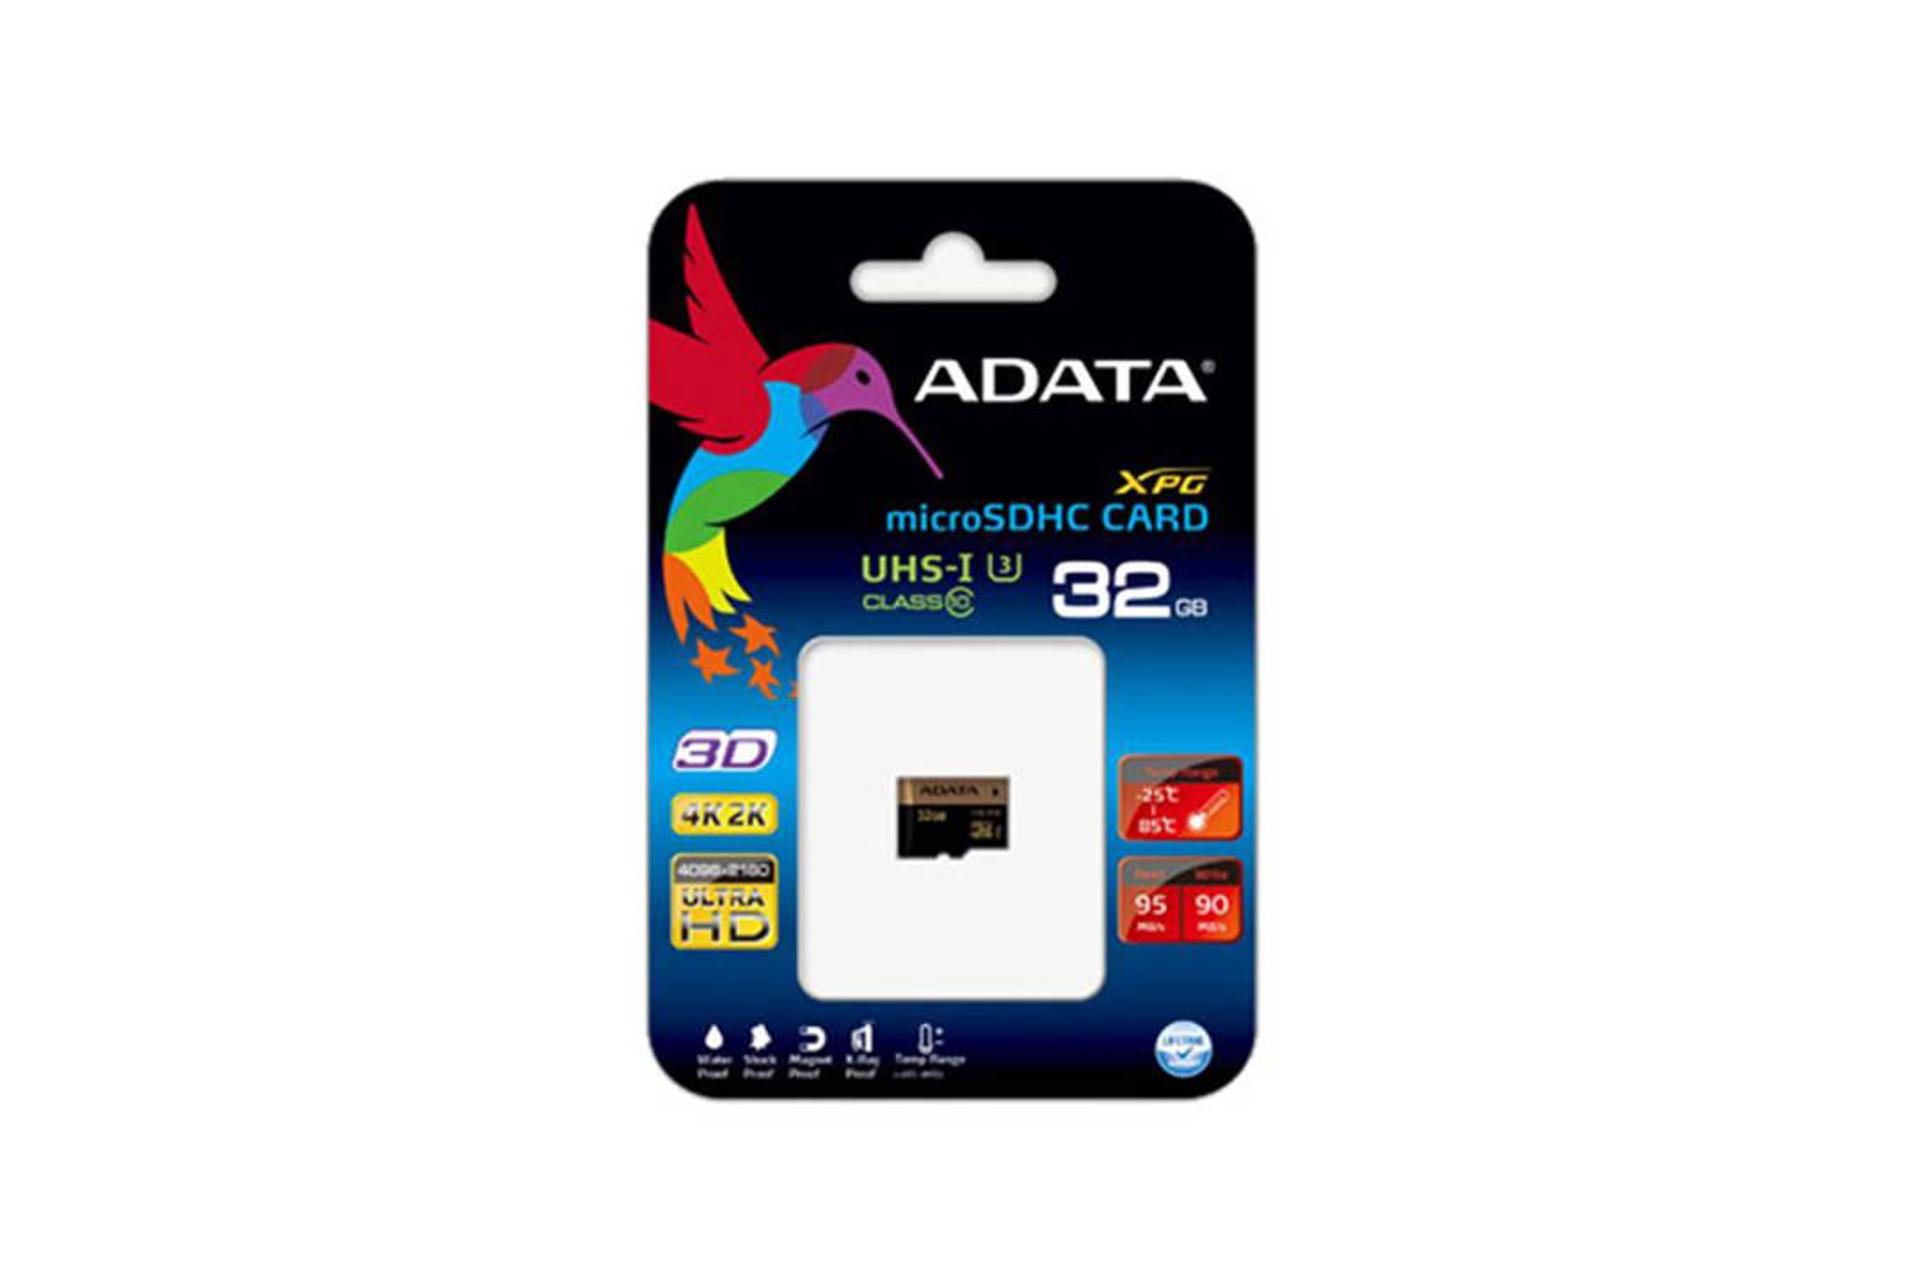 ADATA XPG microSDHC Class 10 UHS-I U3 32GB